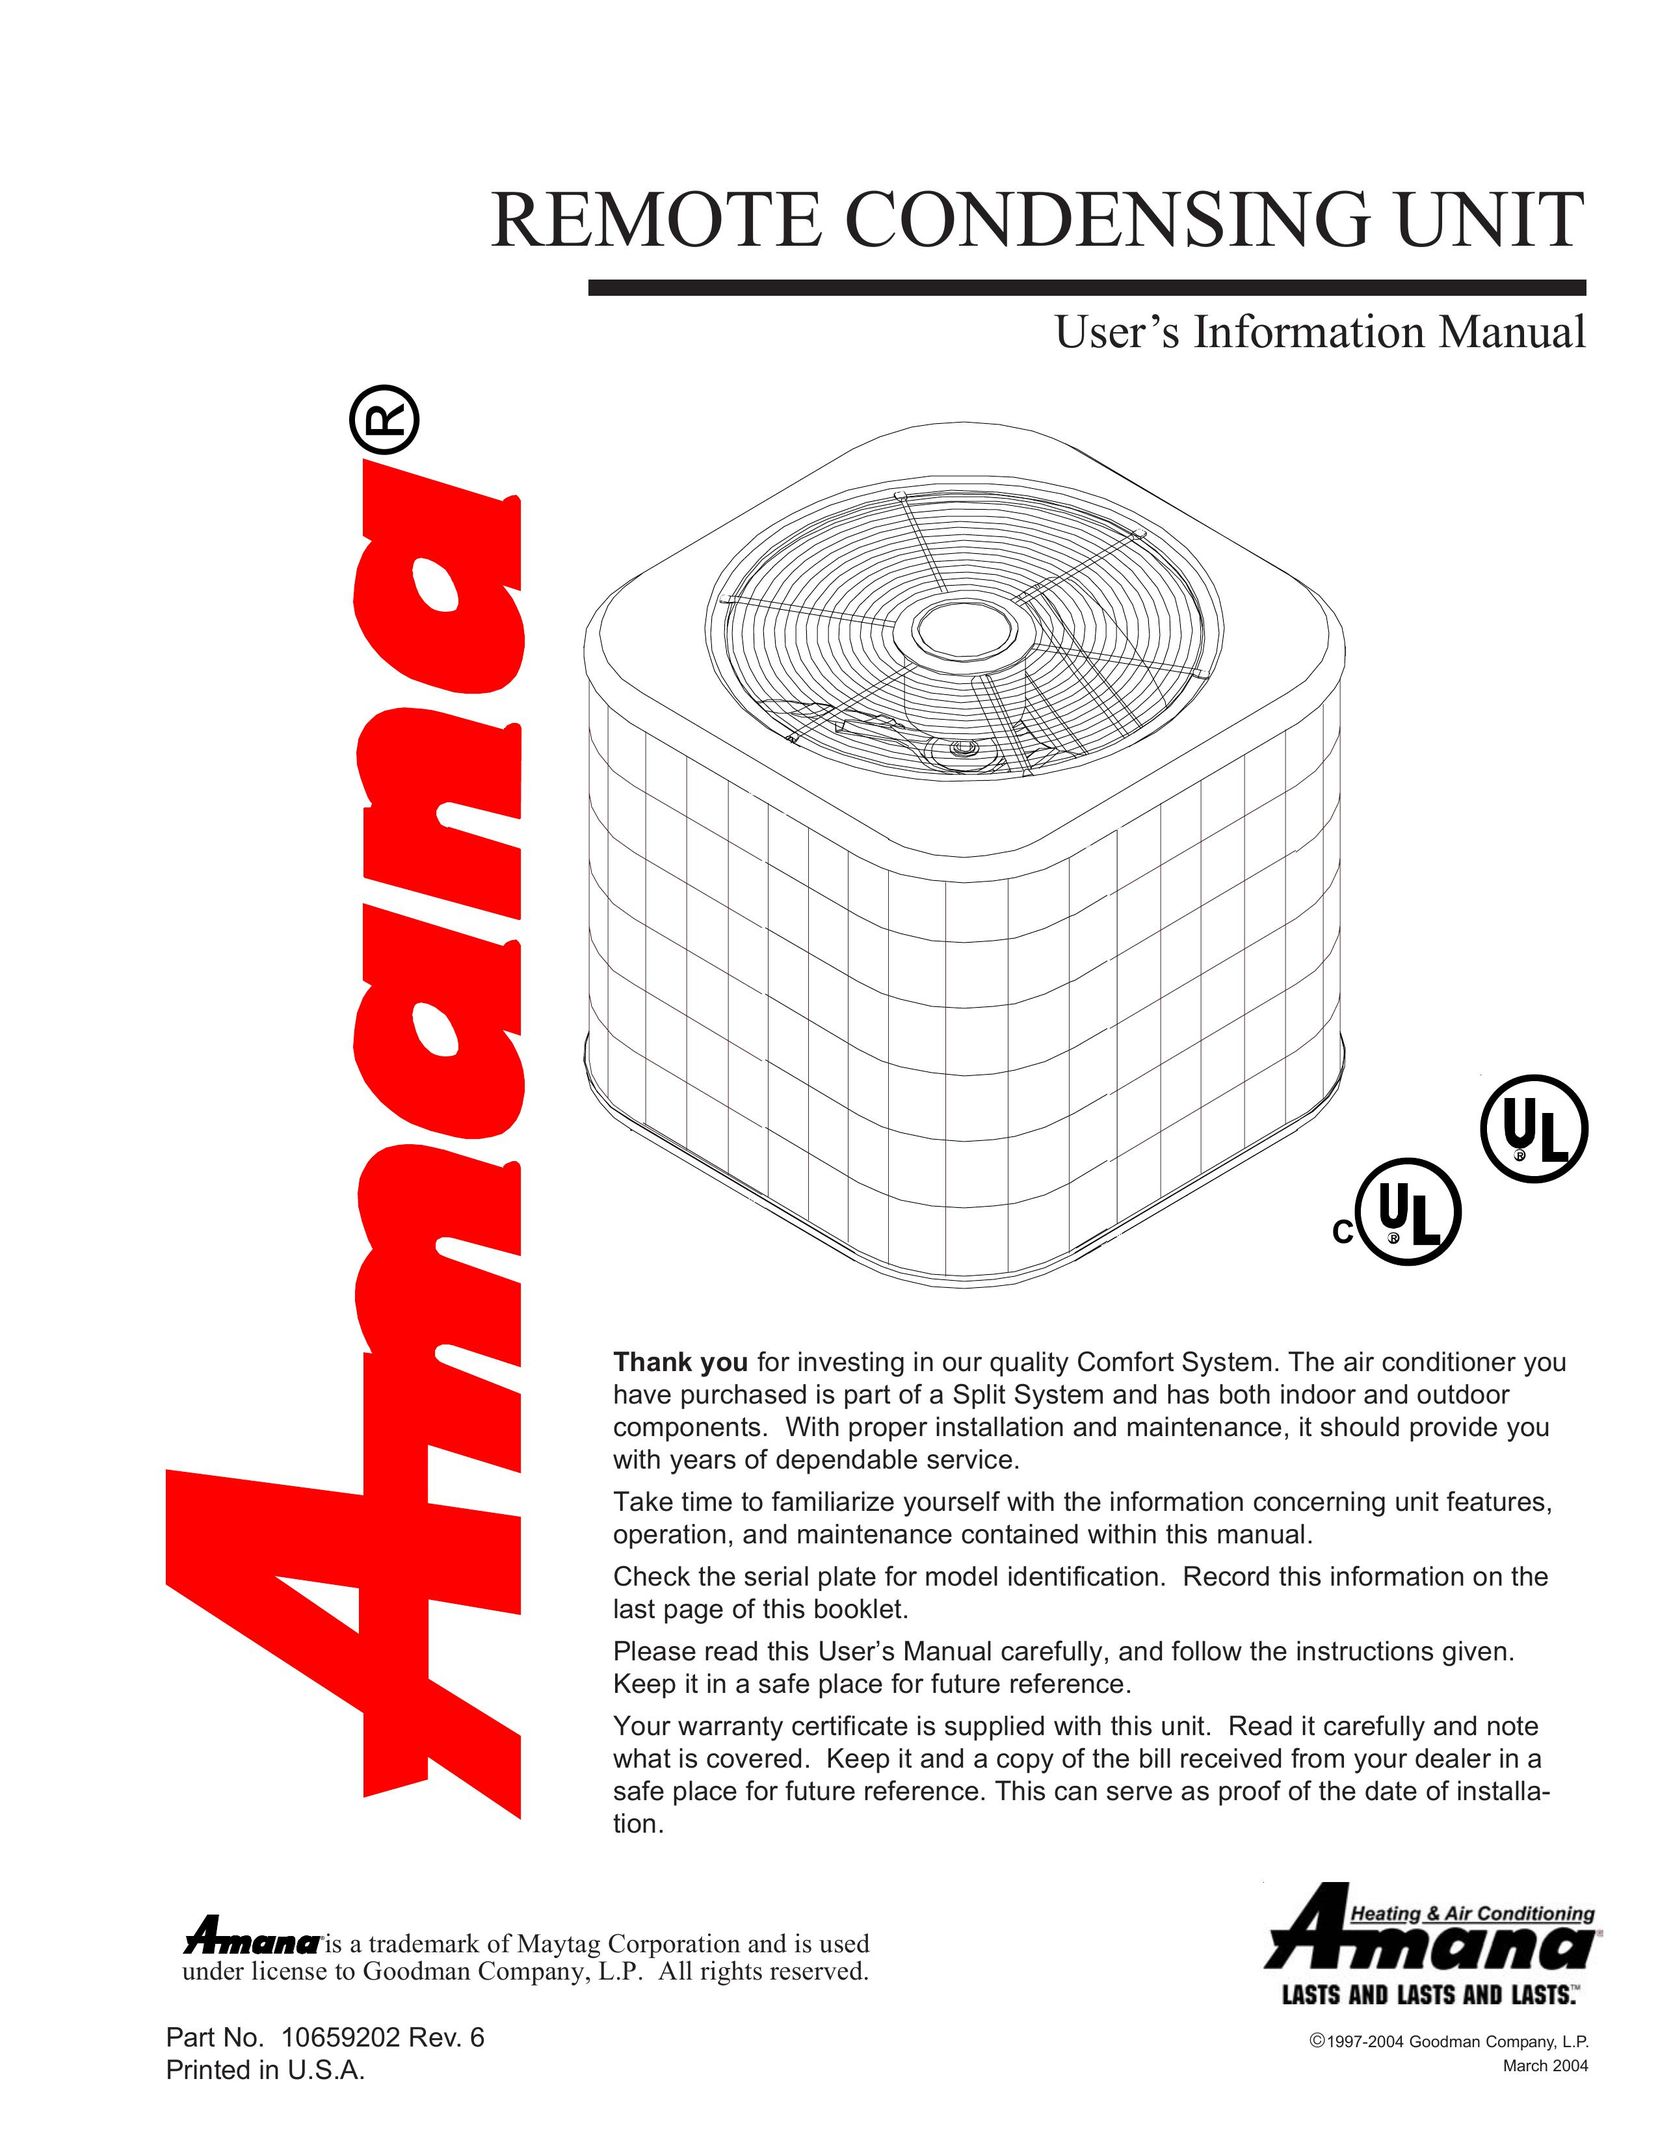 Amana REMOTE CONDENSING UNIT Air Conditioner User Manual